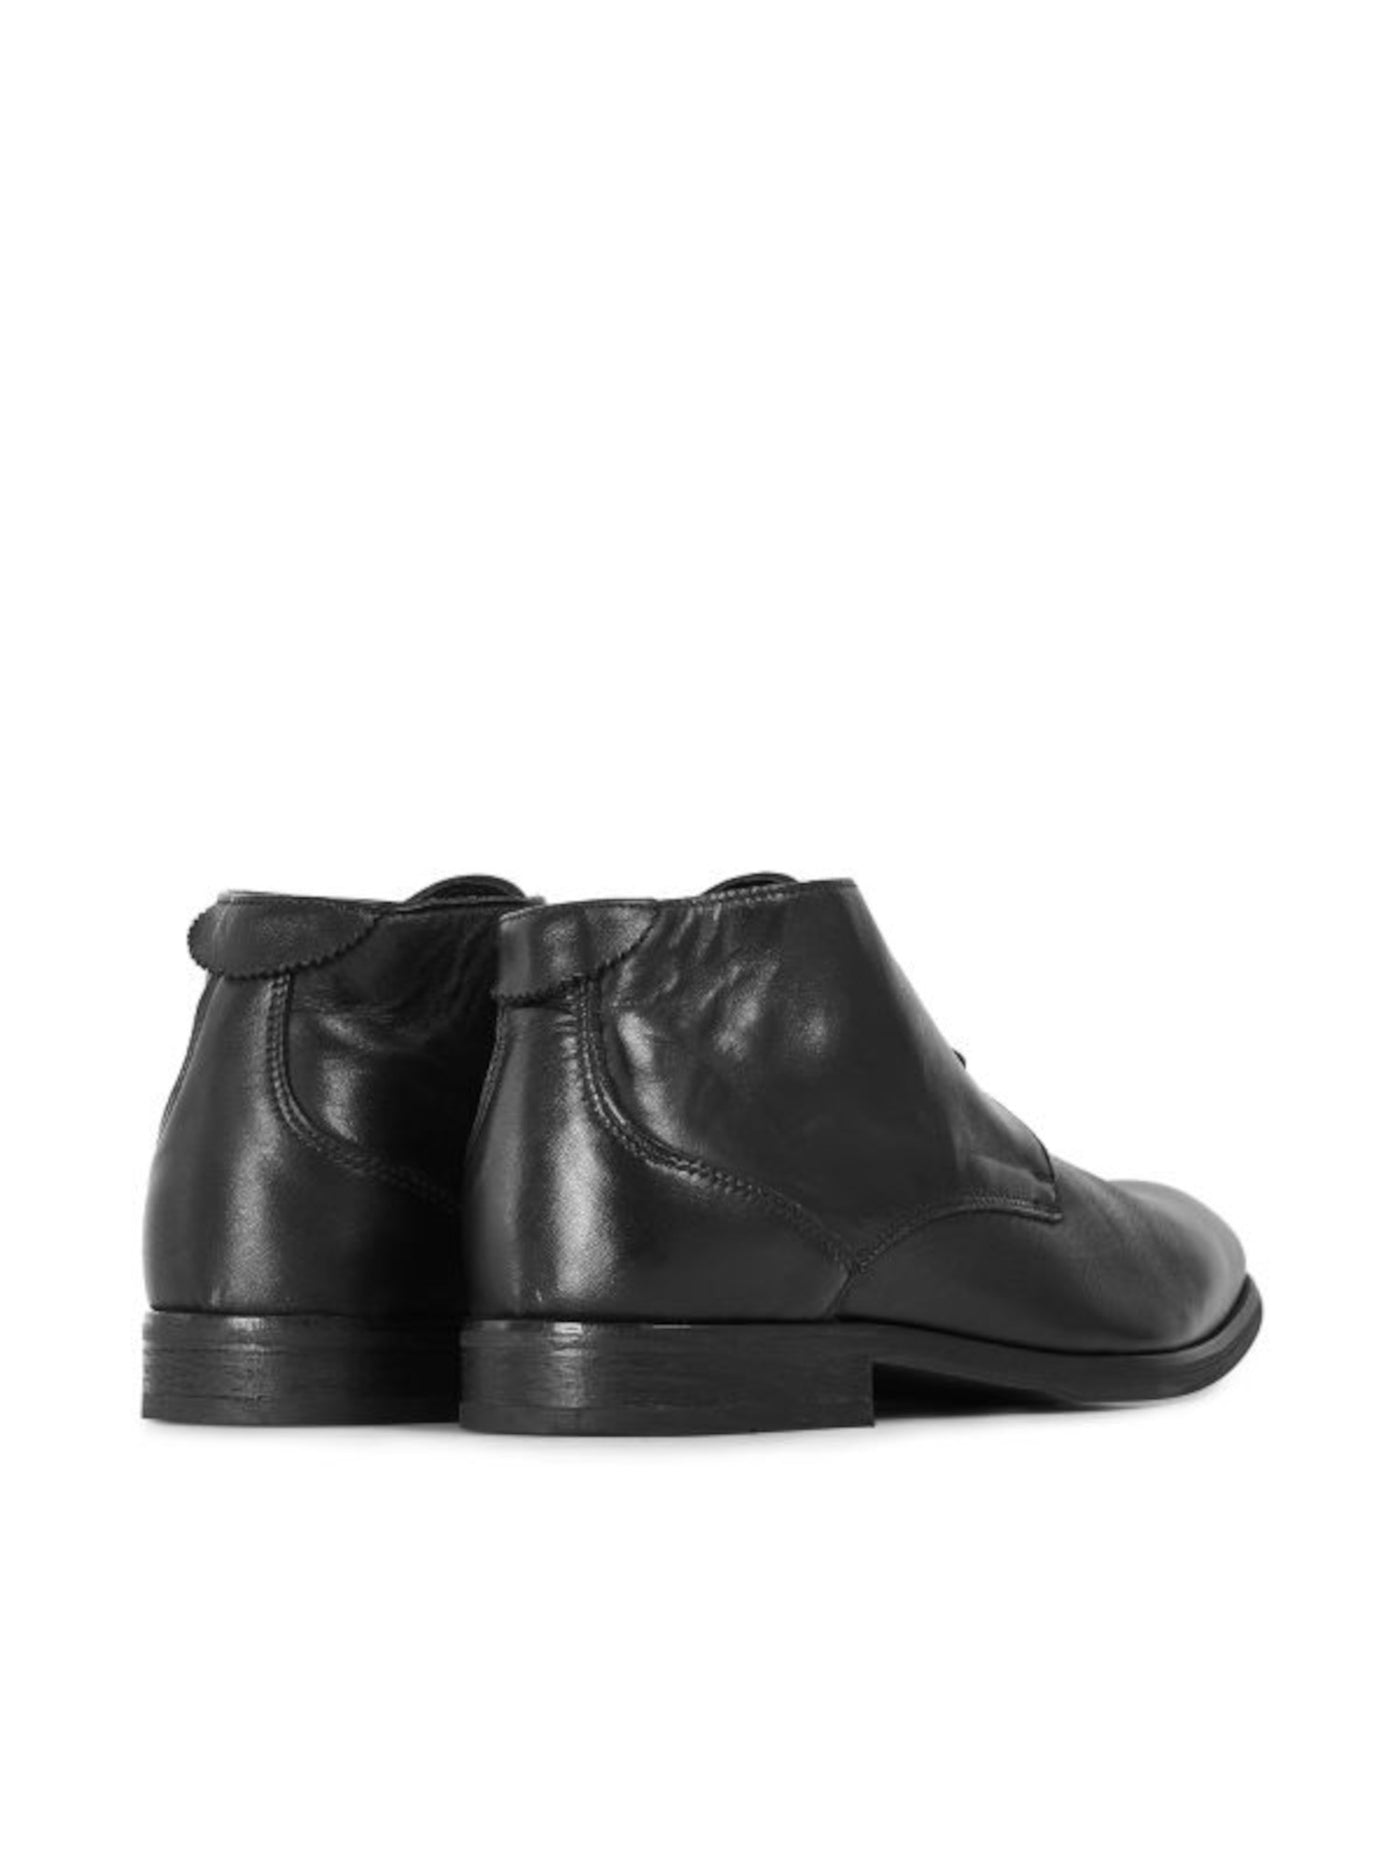 HUDSON Mens Black Washed Comfort Osbourne Round Toe Block Heel Lace-Up Leather Chukka Boots 45